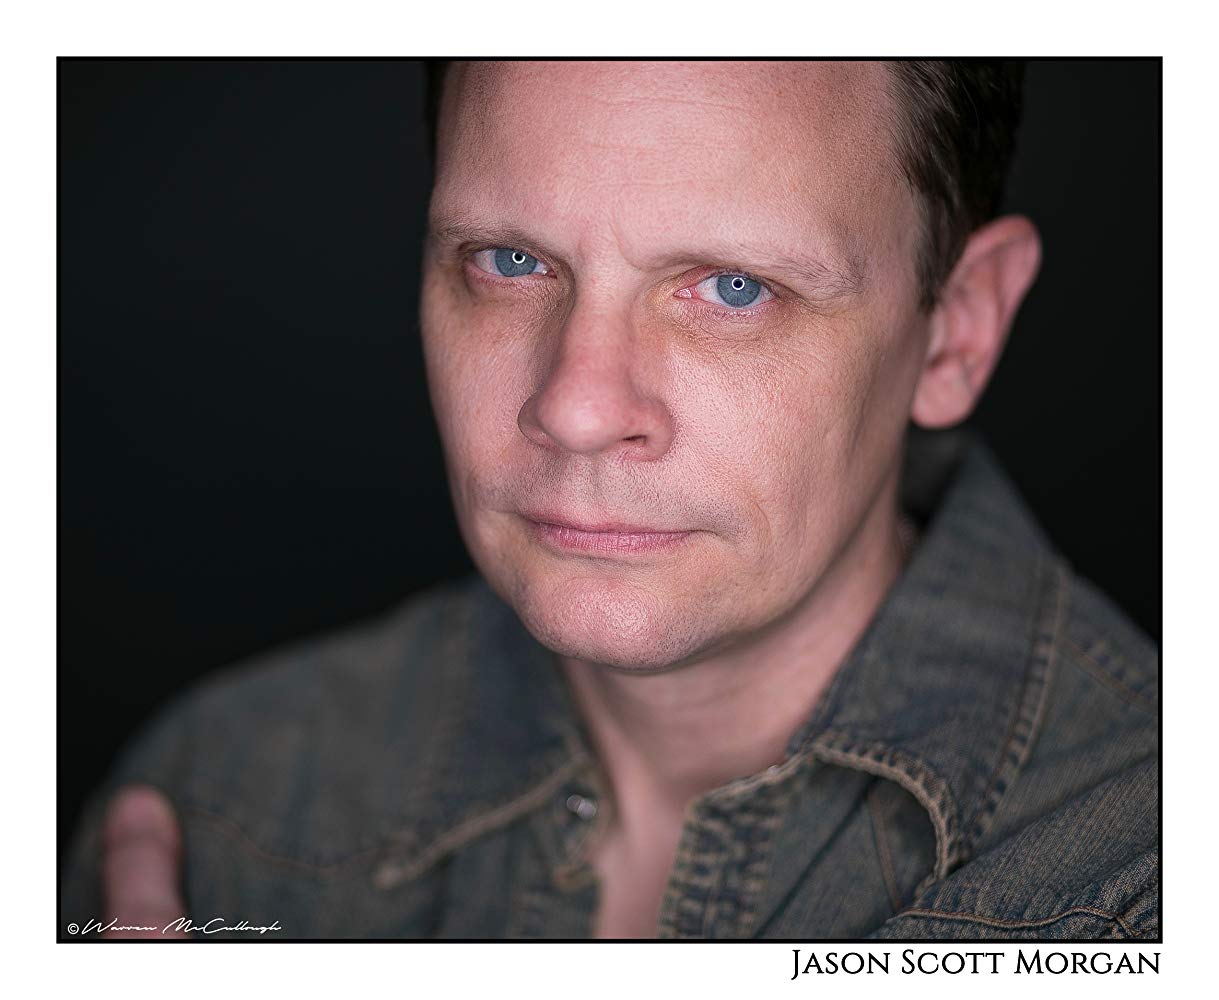 Jason Scott Morgan